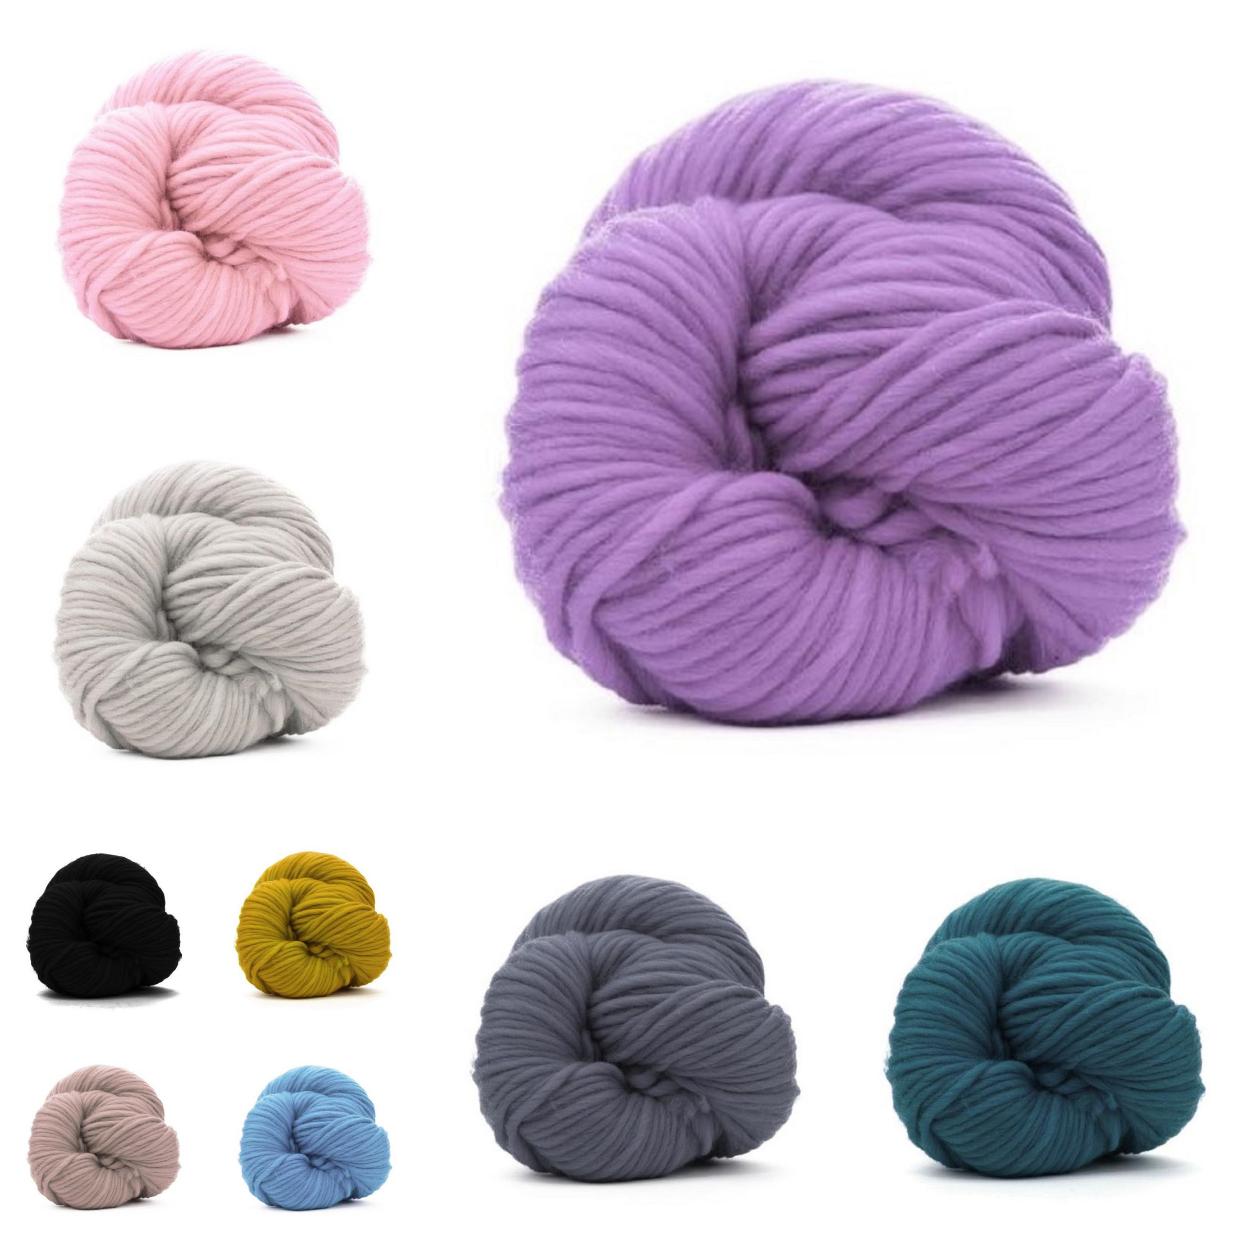 Chunky Prrrrfect Hat Yarn, Superwash Merino, Yarn and Pom, Pom Pom